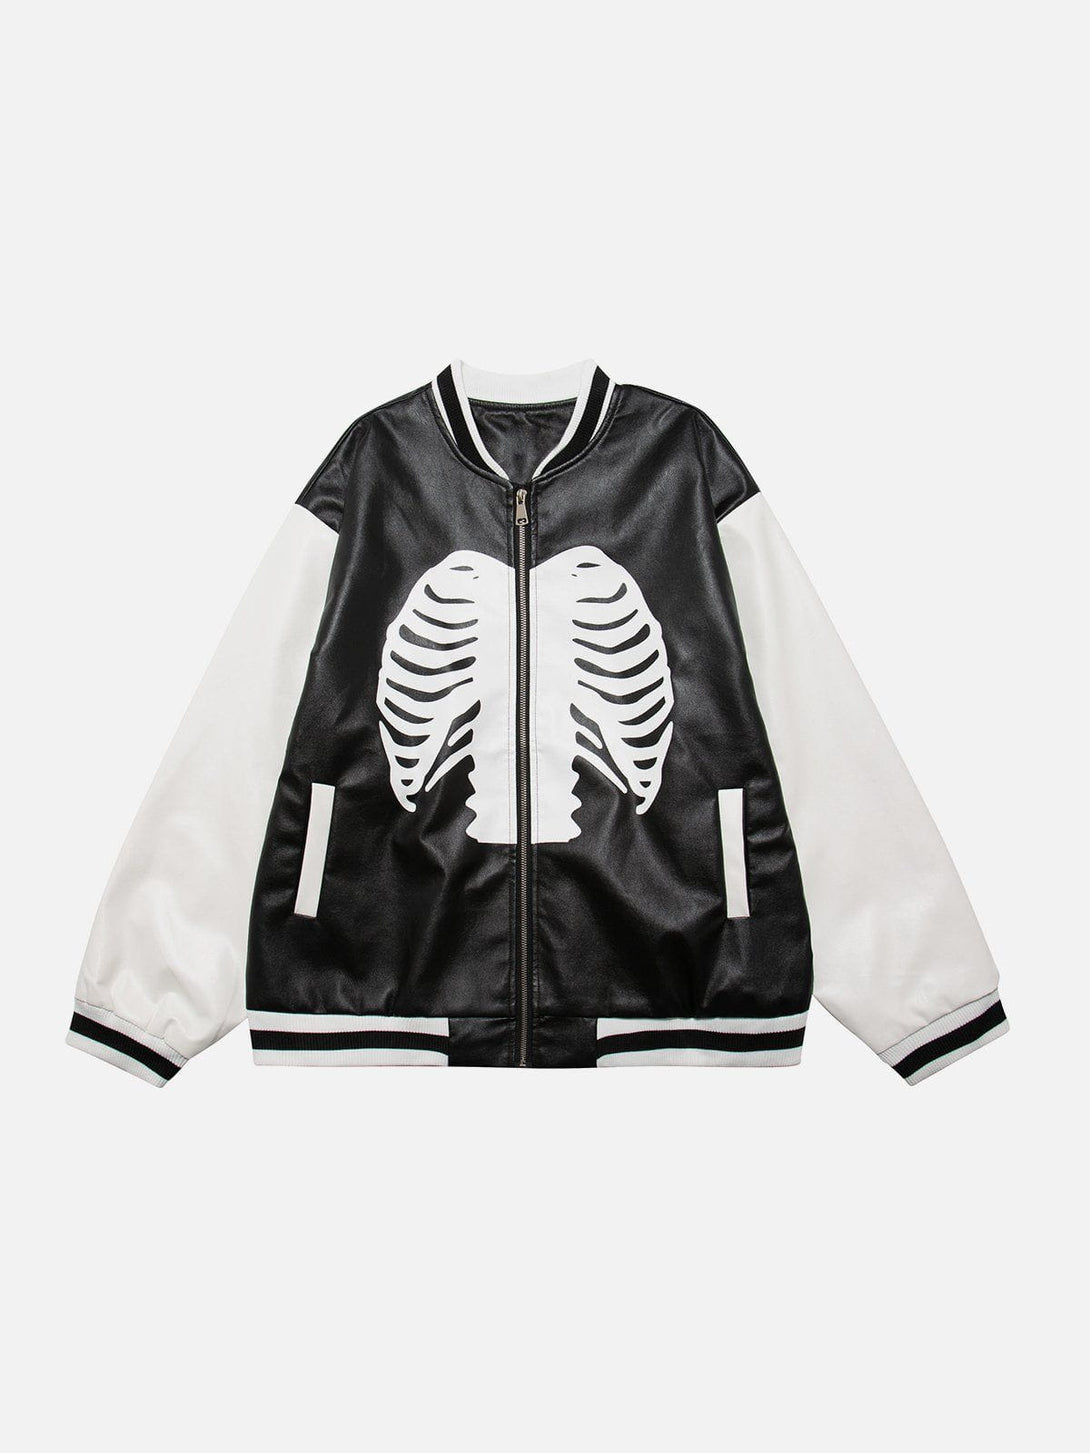 Majesda® - Skeleton Zip Up Varsity Jacket outfit ideas, streetwear fashion - majesda.com